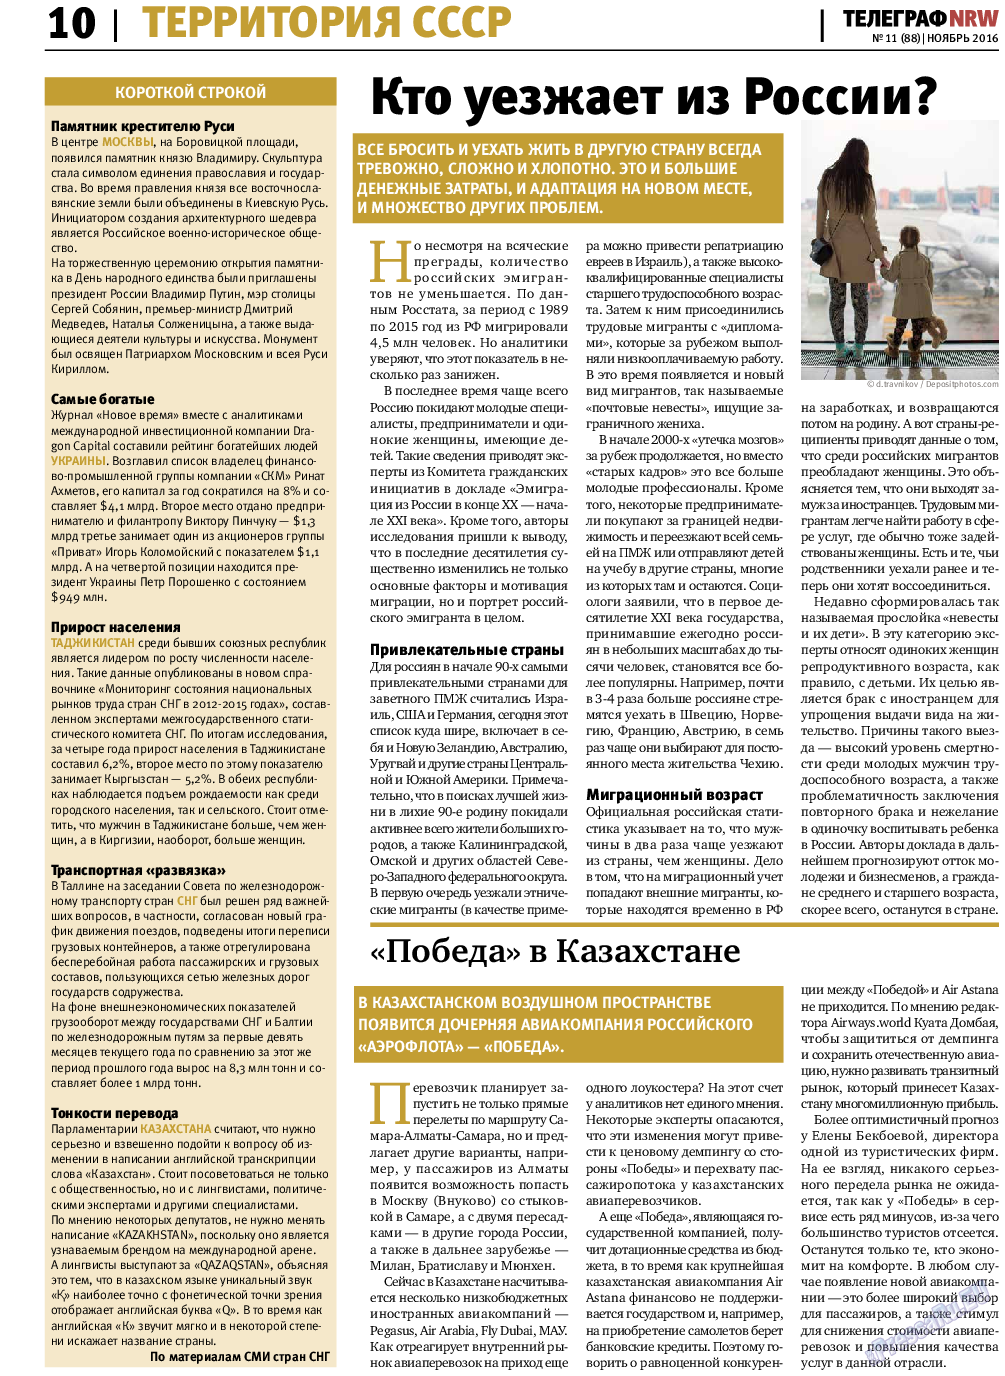 Телеграф NRW, газета. 2016 №11 стр.10